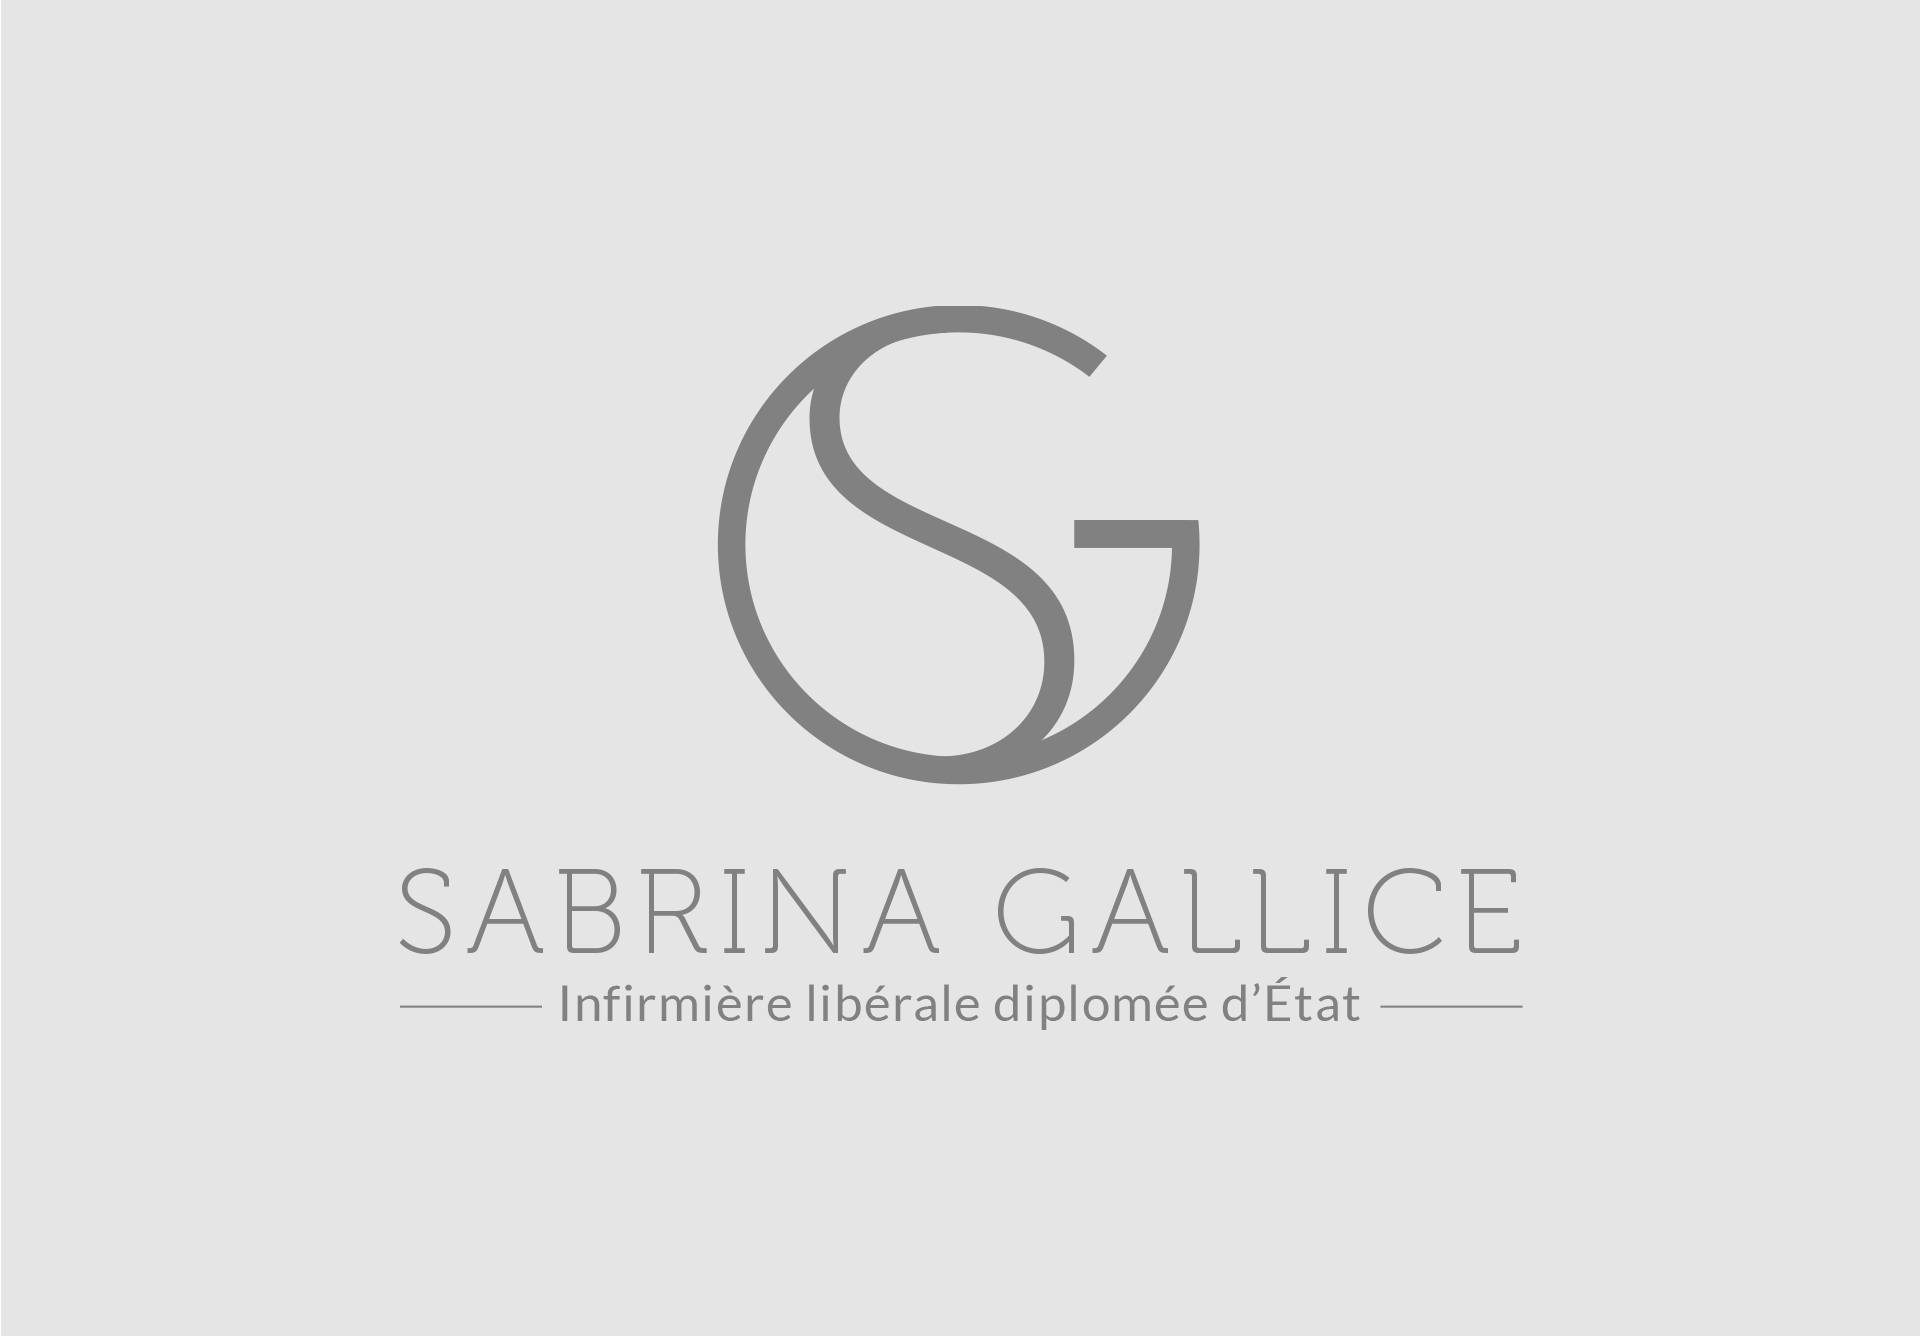 Sabrina Gallice - Infirmière libérale diplômé d'état